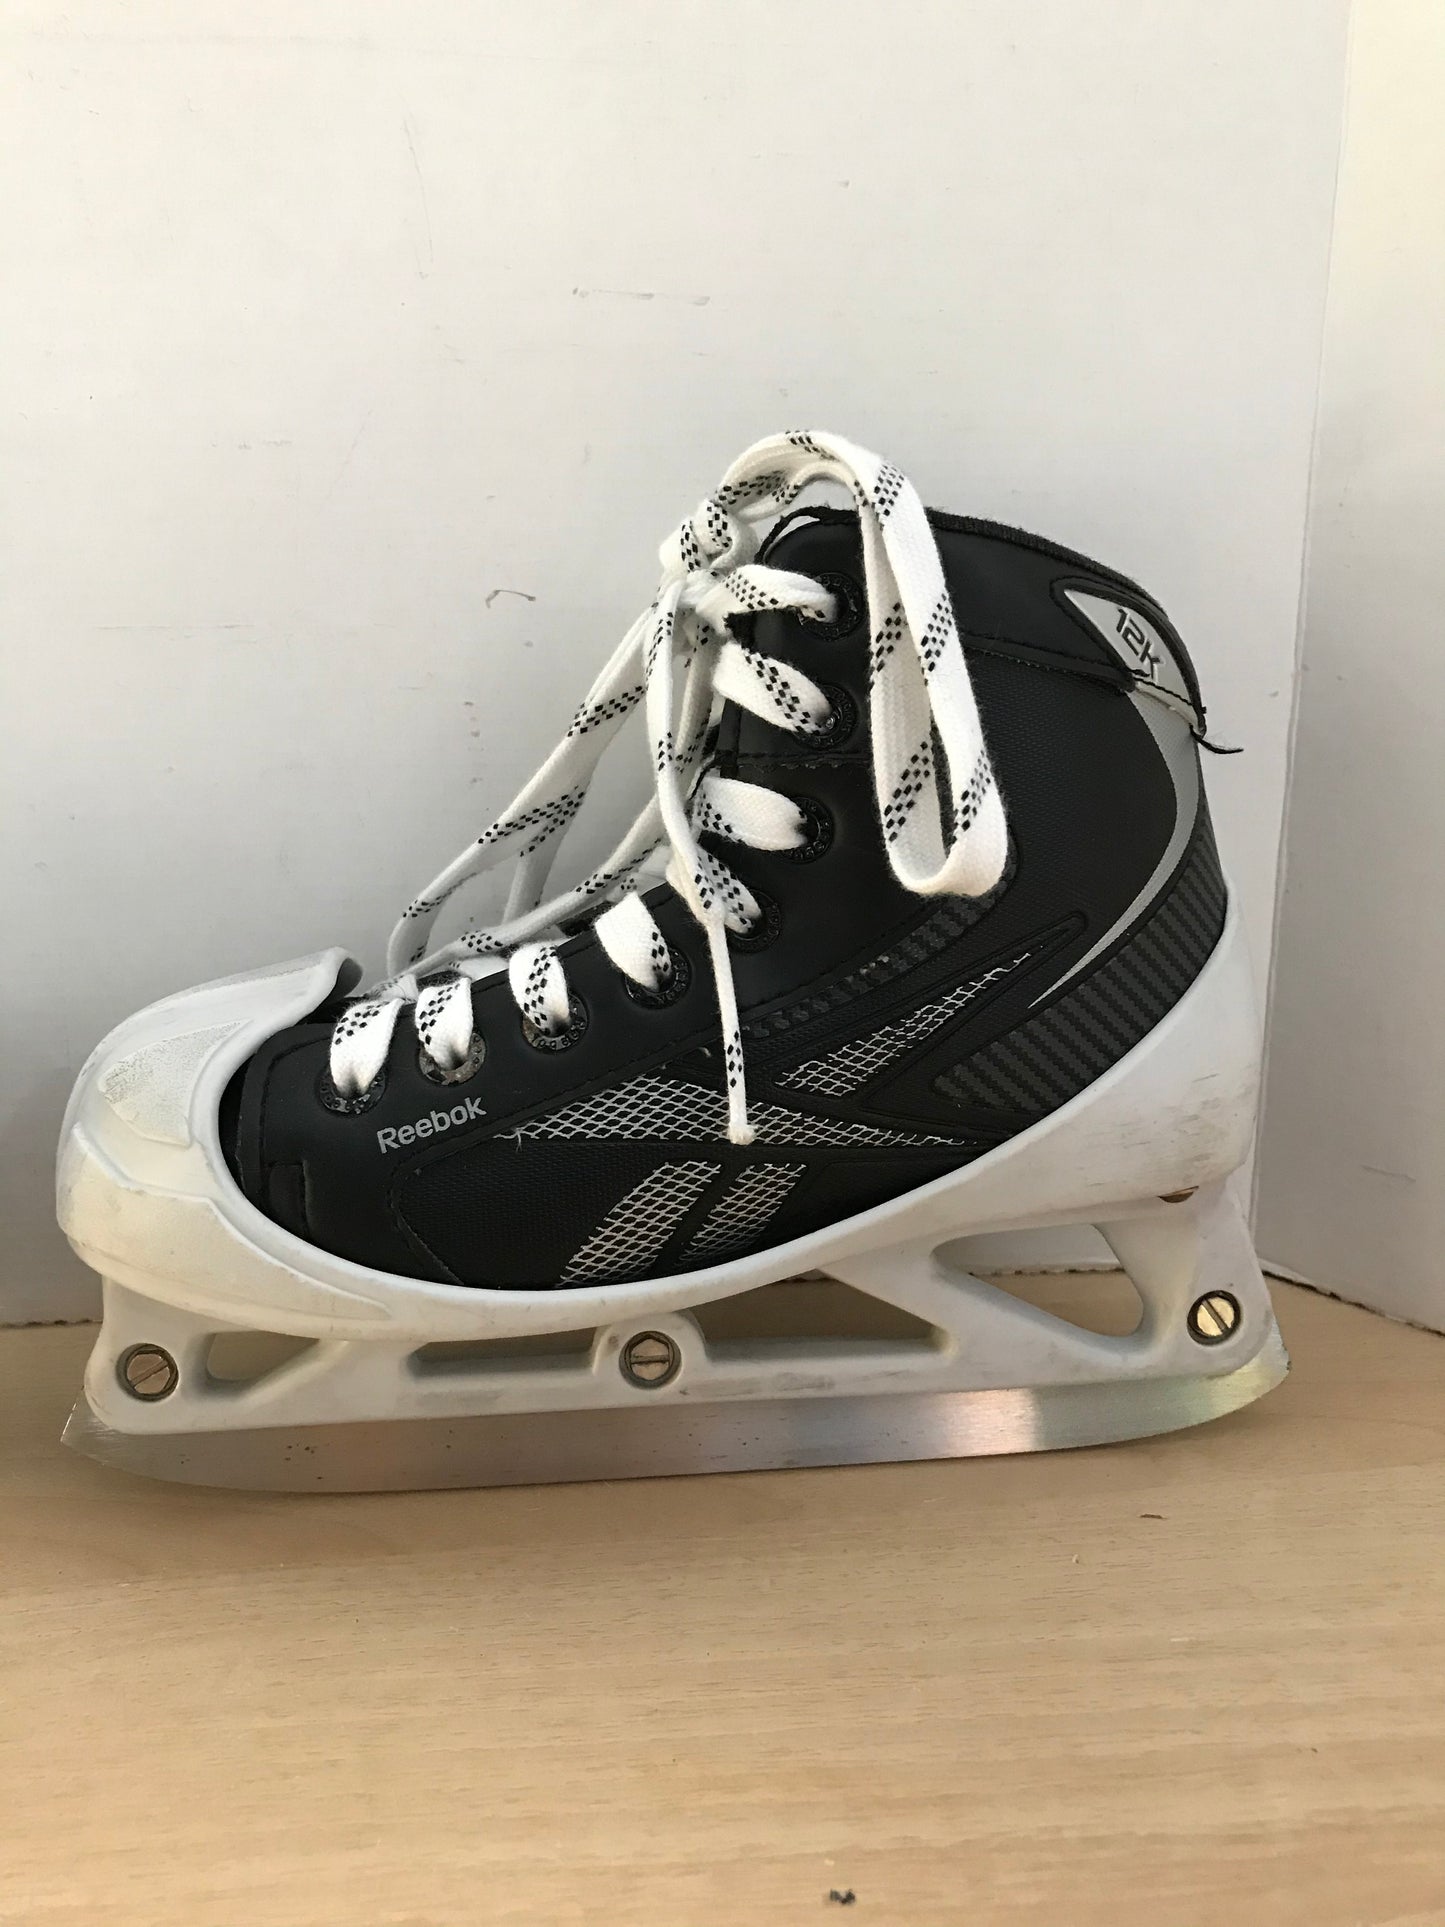 Hockey Goalie Skates Child Size 2.5 Shoe Size Reebok 12K